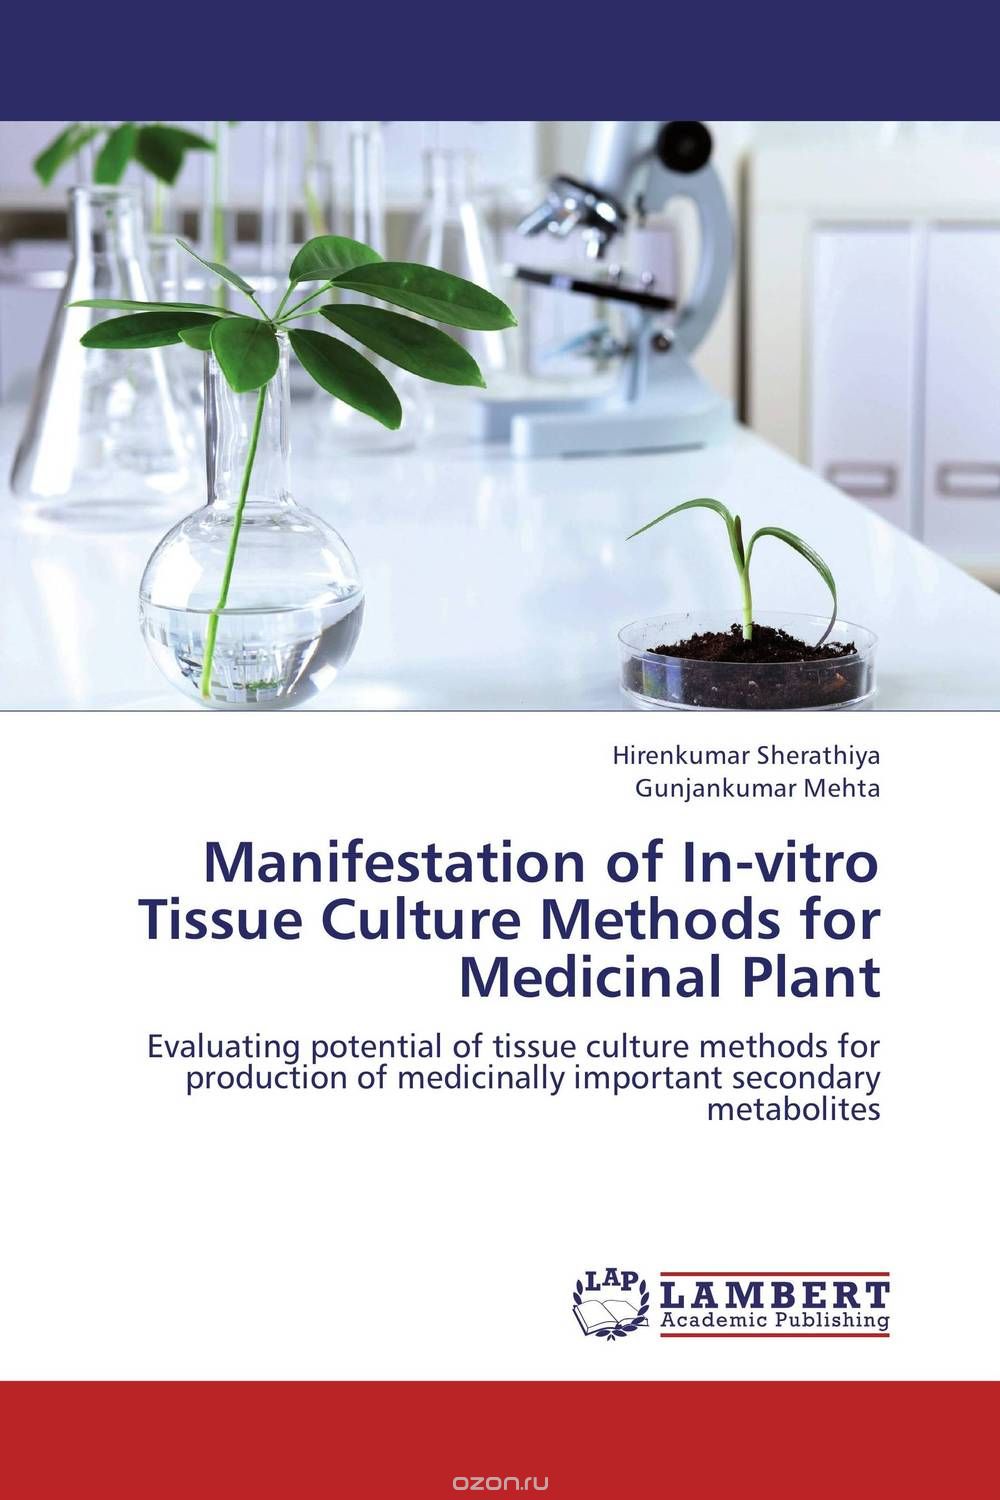 Скачать книгу "Manifestation of In-vitro Tissue Culture Methods for Medicinal Plant"